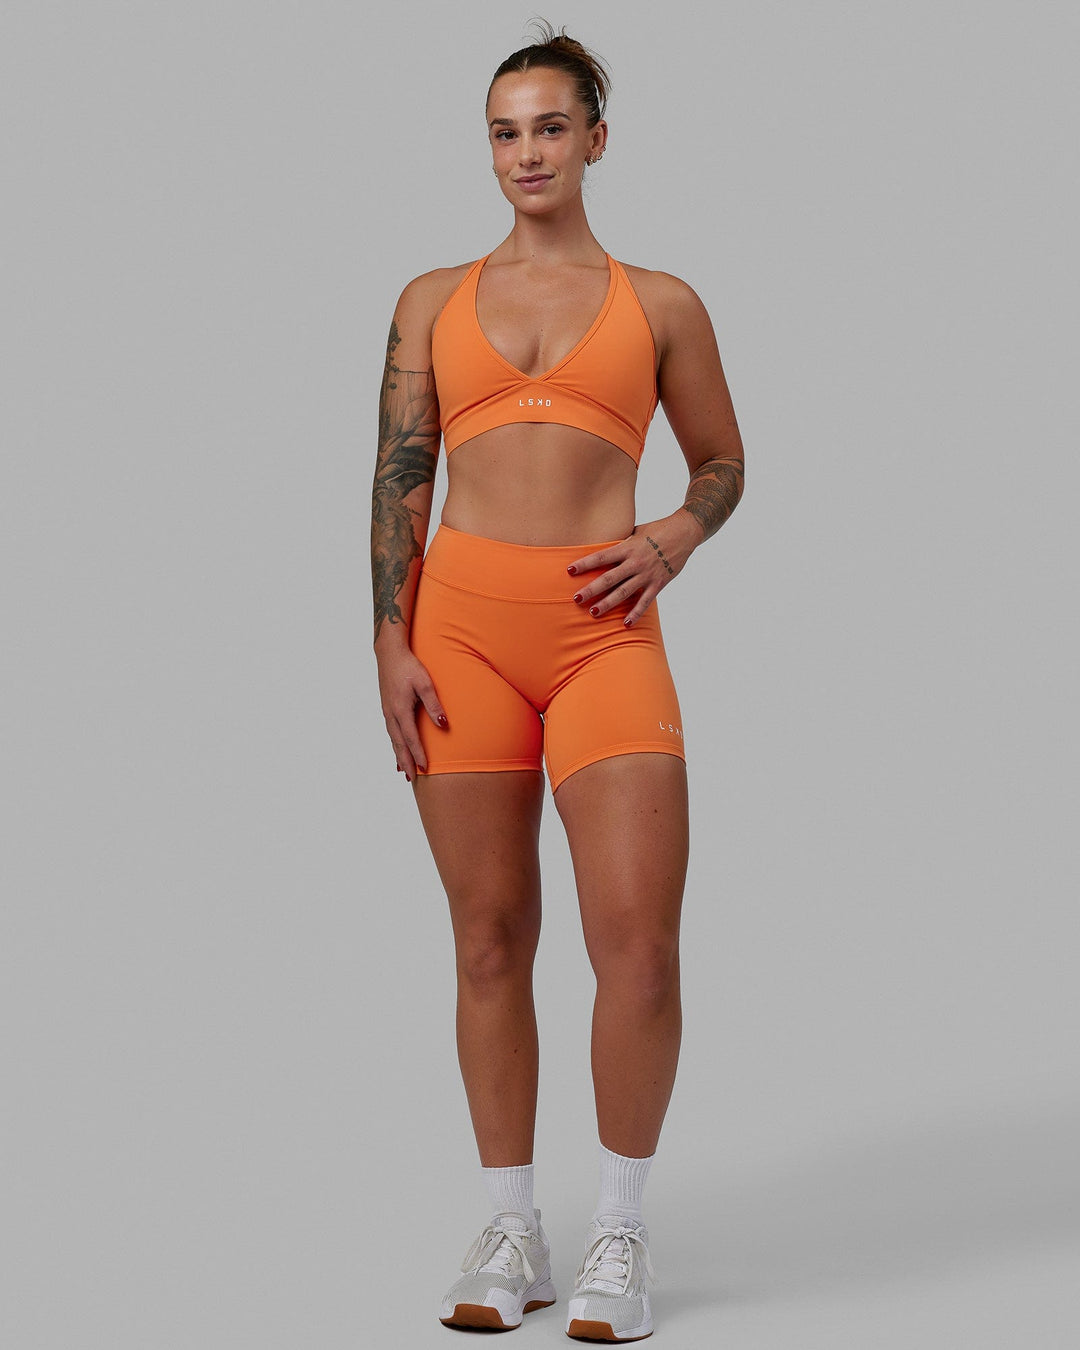 Woman wearing Form Sports Bra - Melon